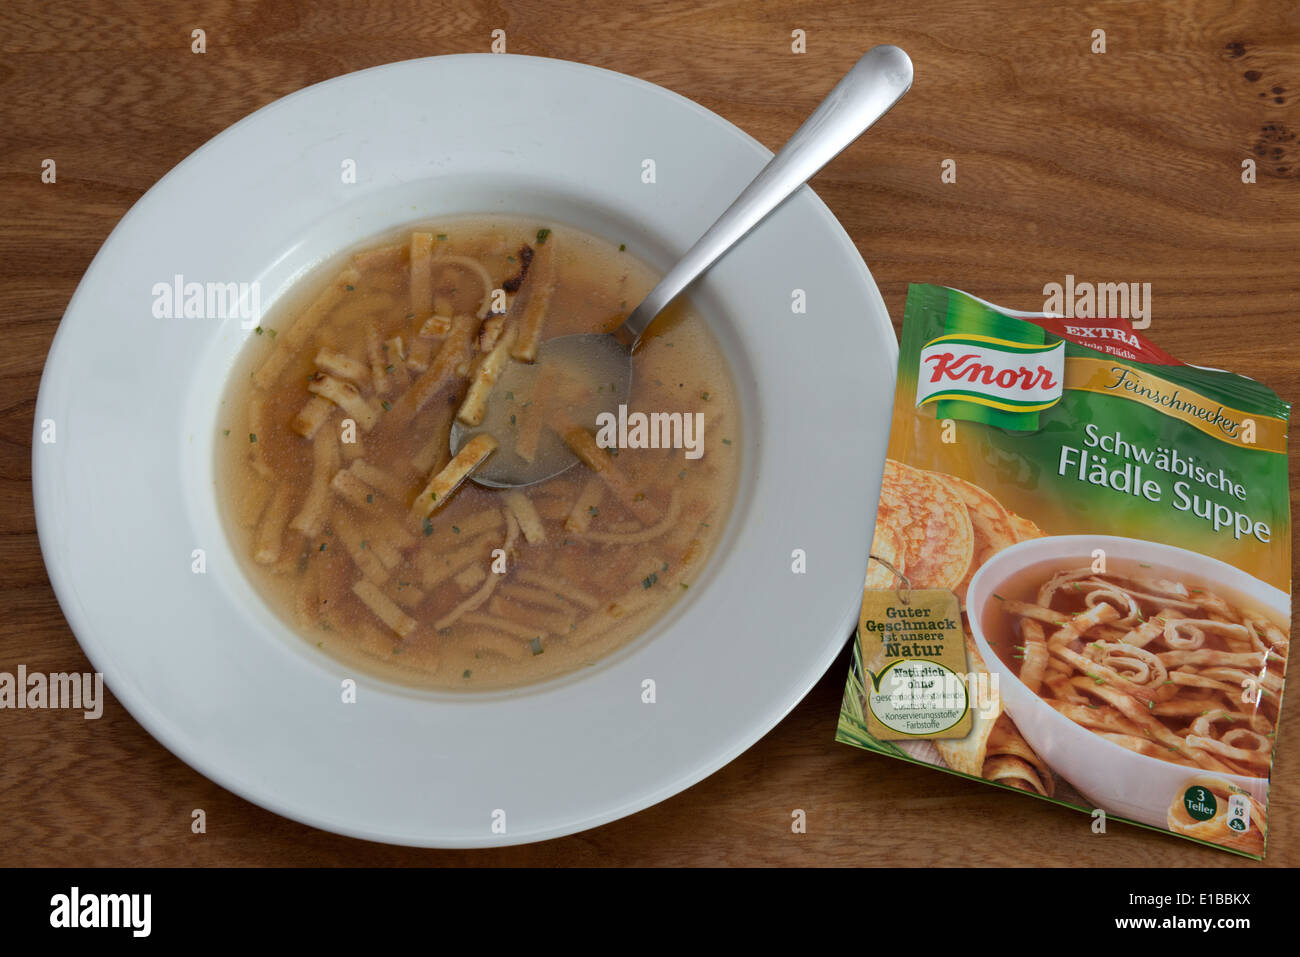 Knorr Schwabische Fladle suppe (soup) Stock Photo